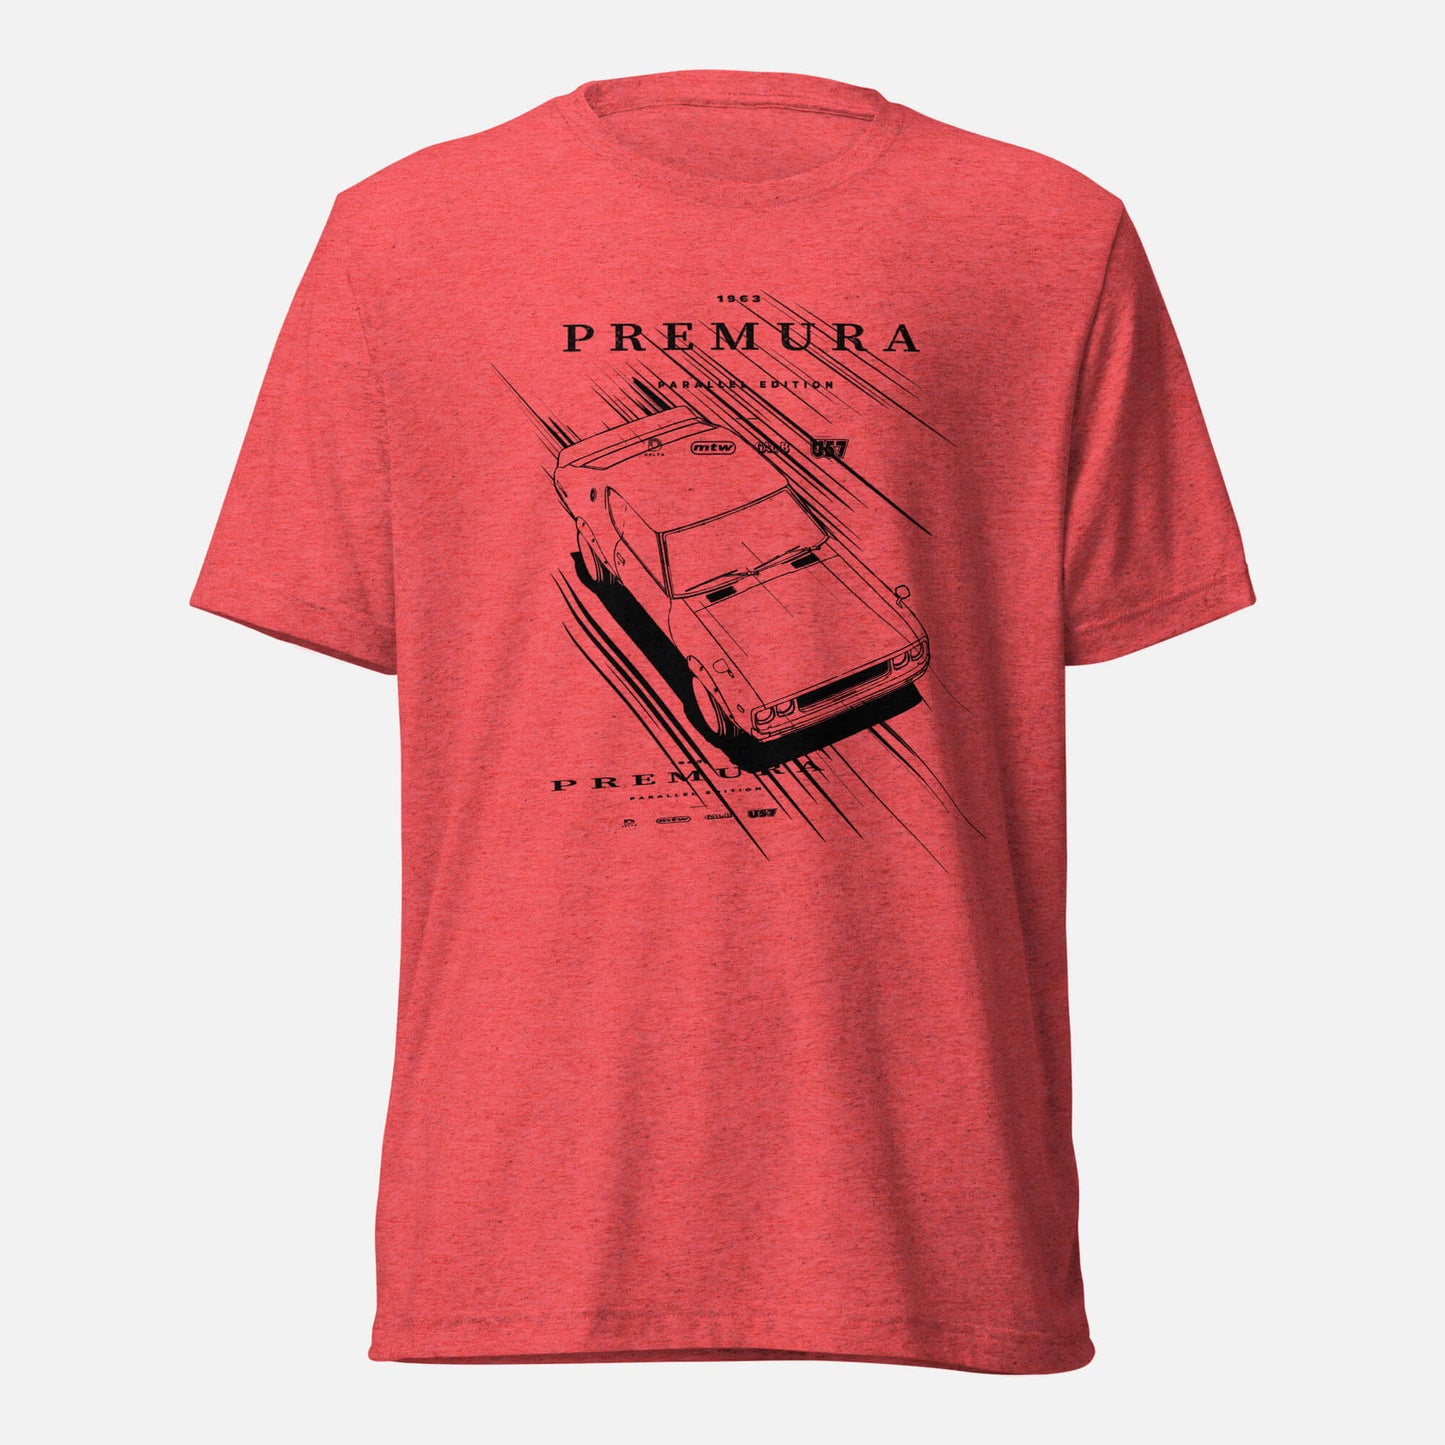 Premura - T-Shirt Unisex